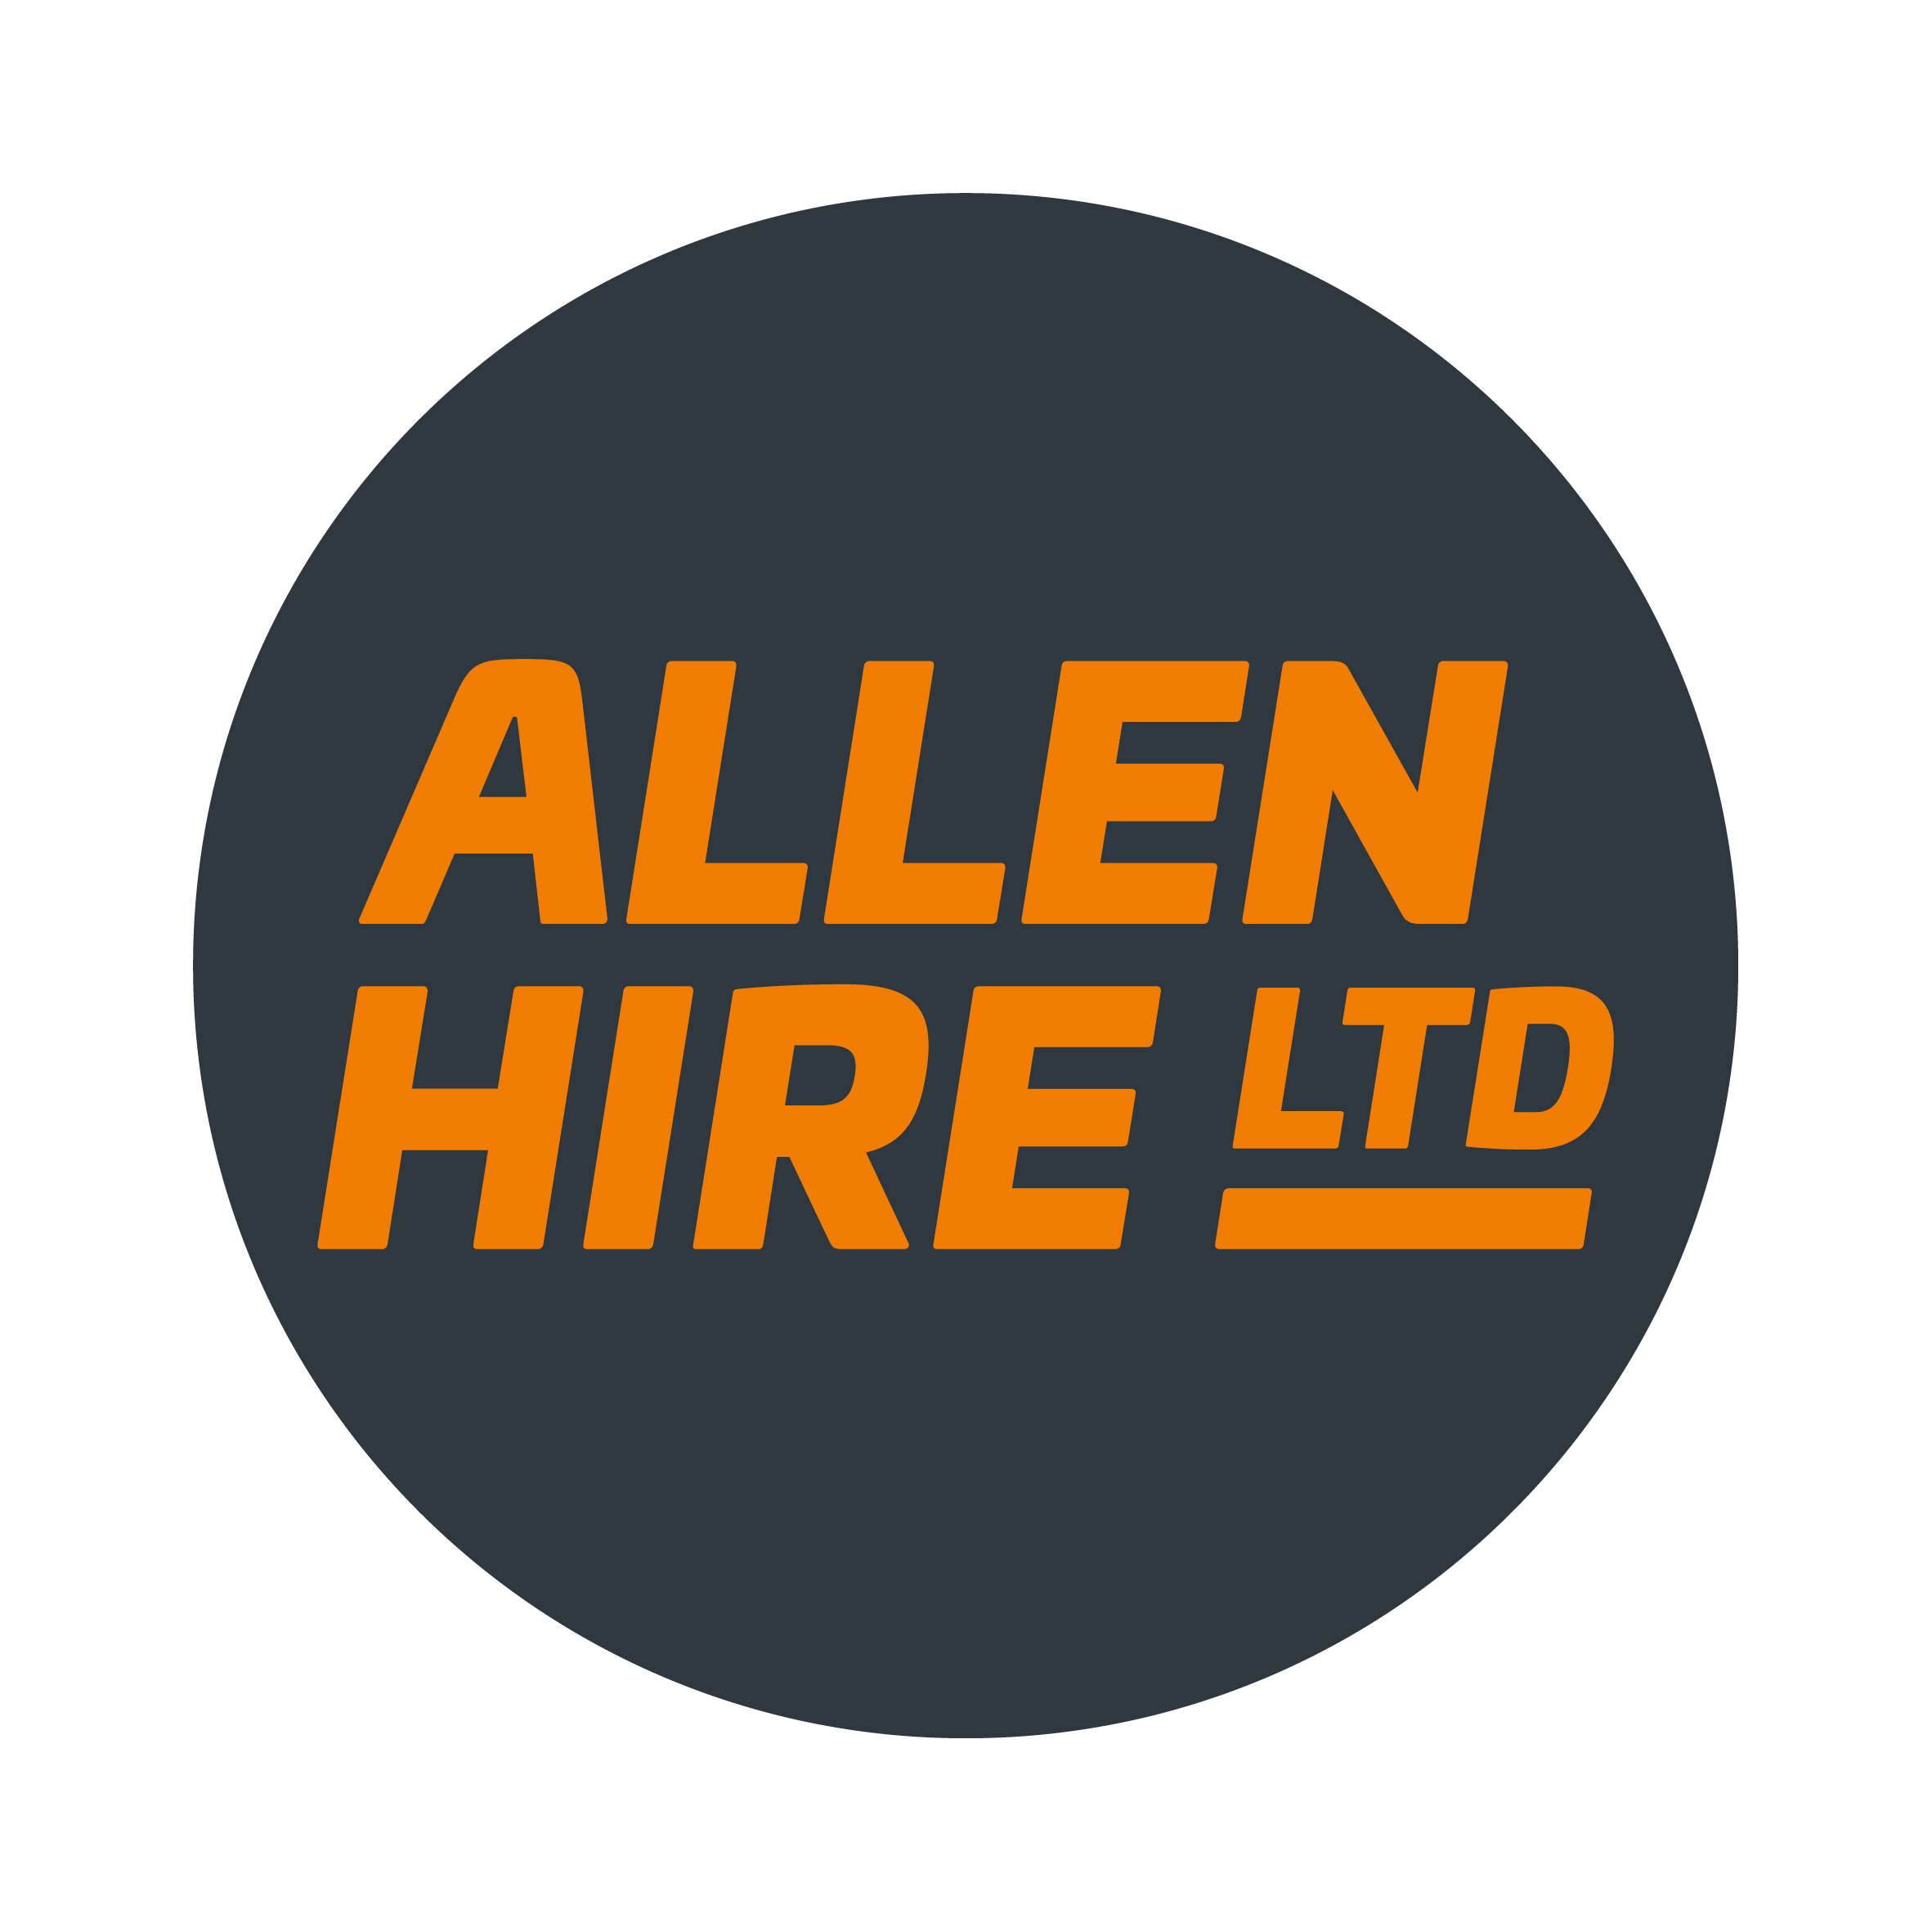 Allen Hire Ltd